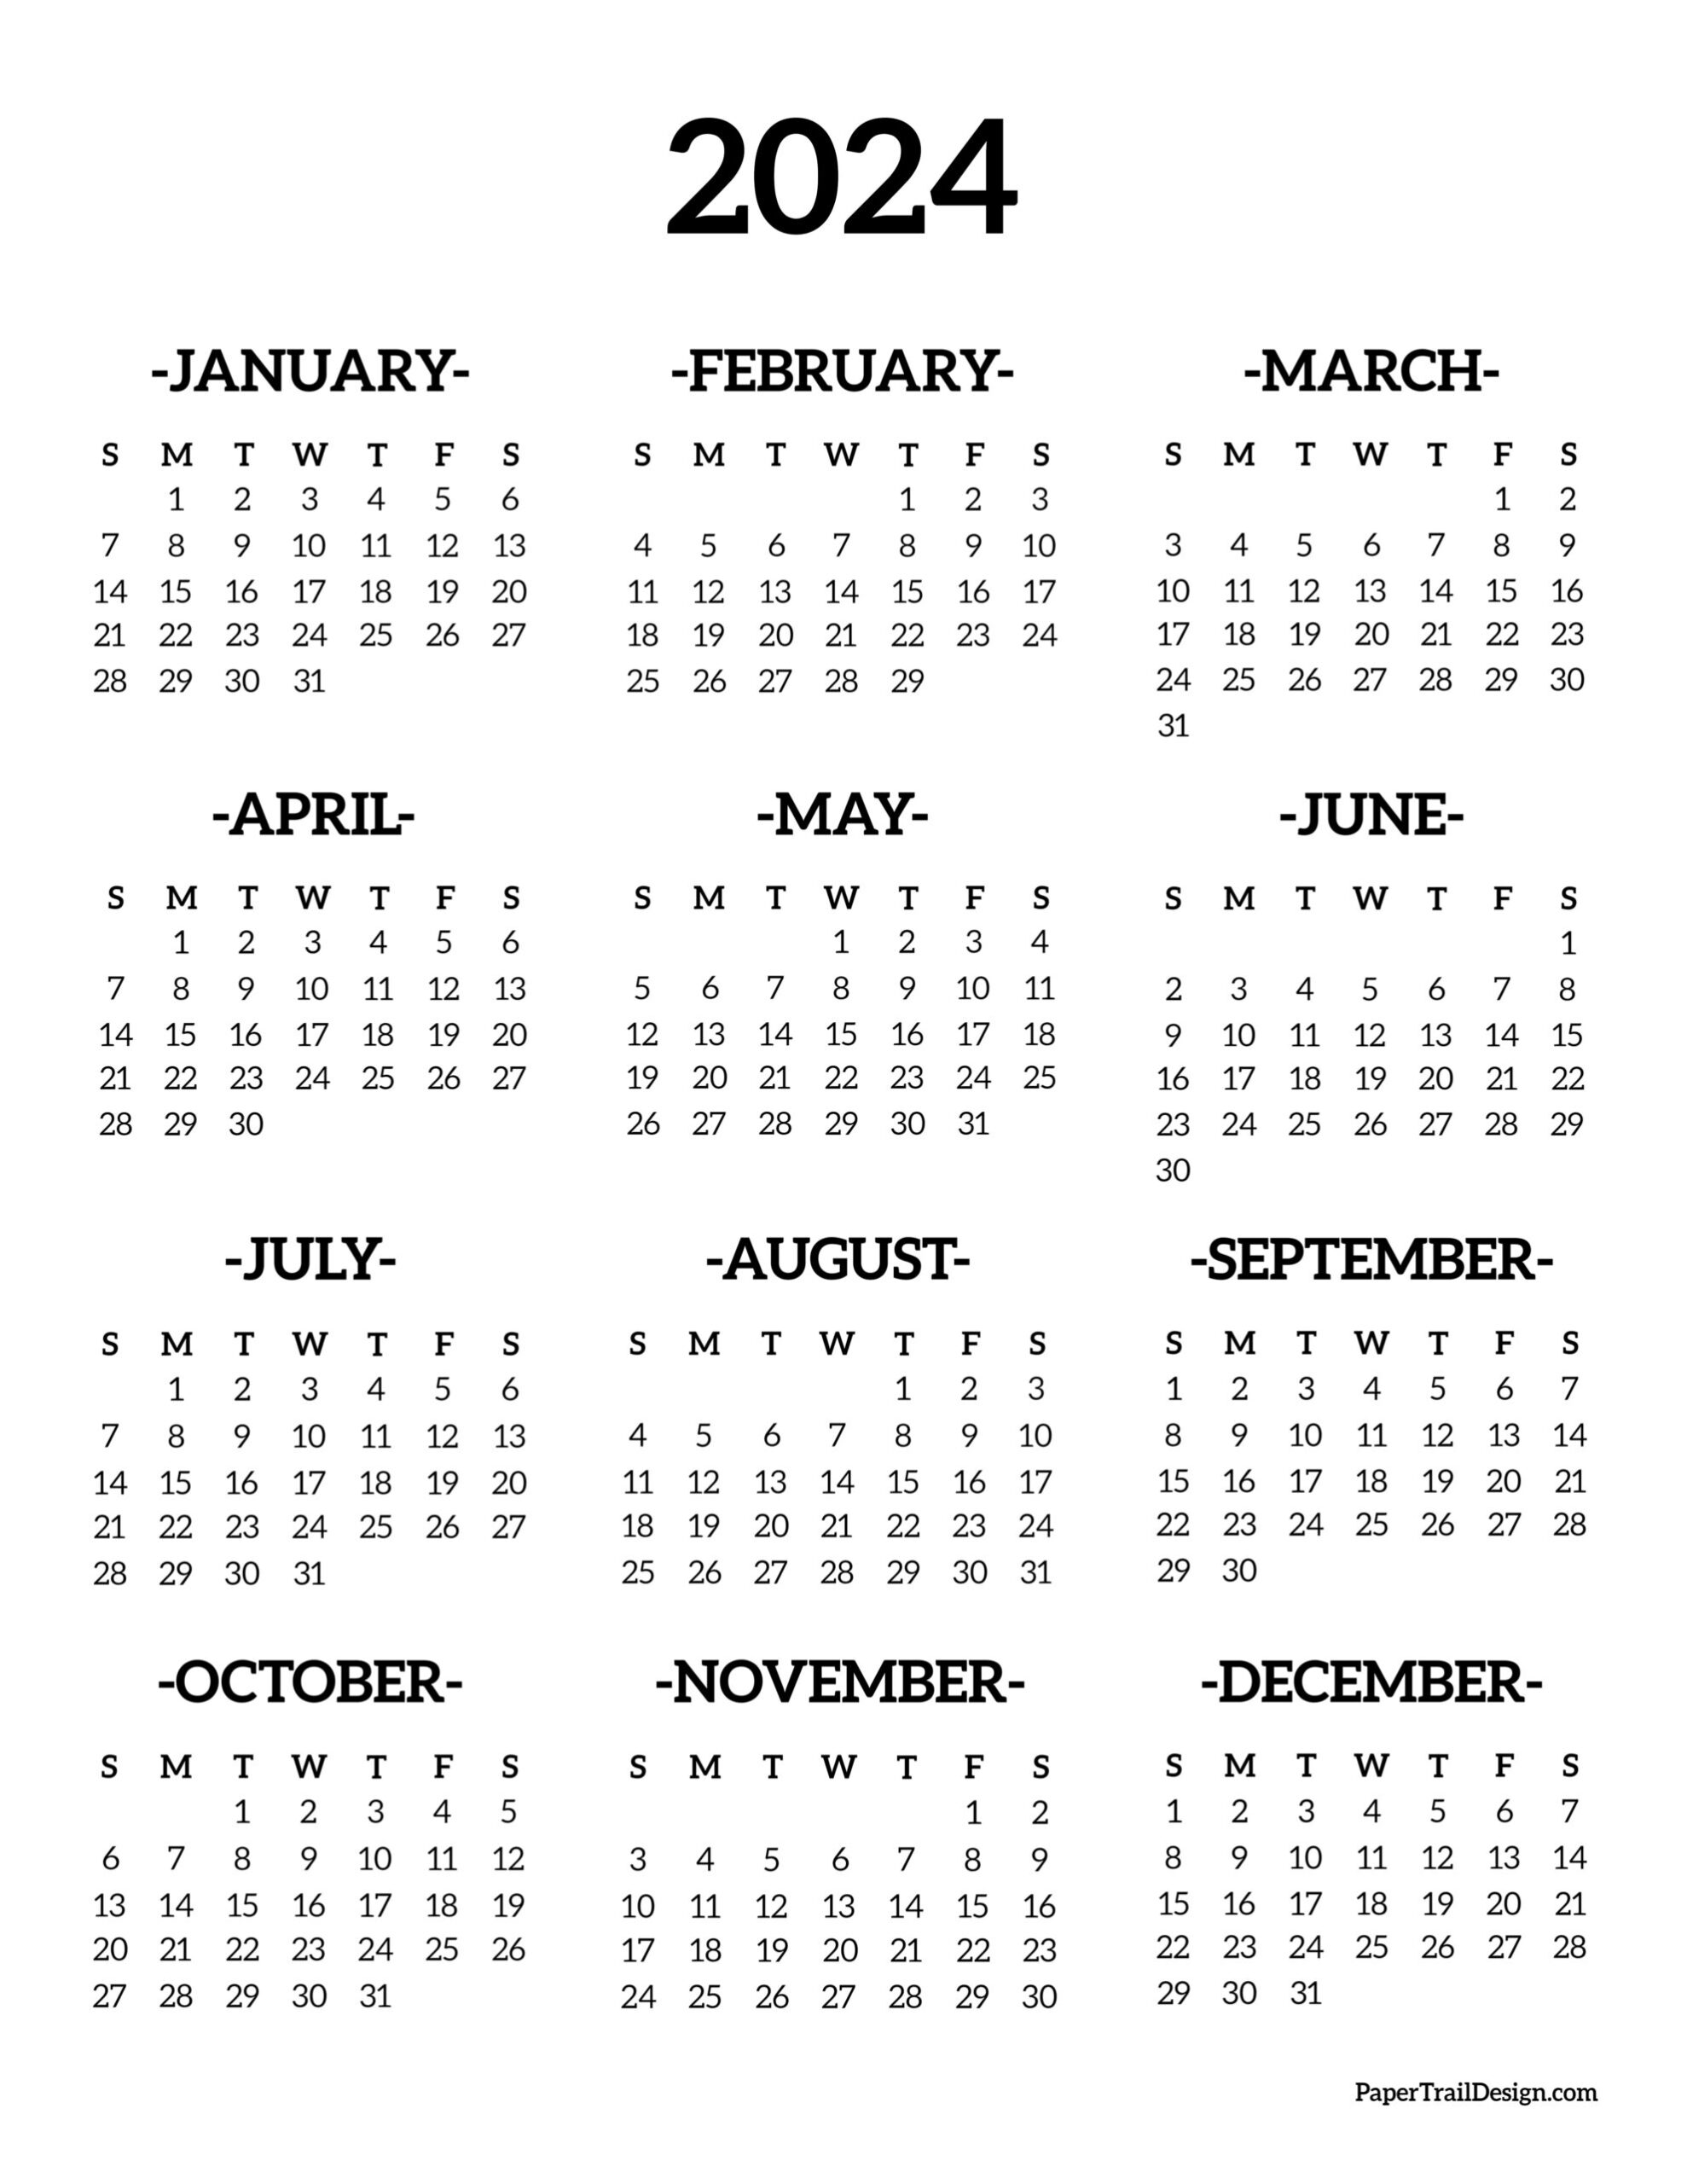 Calendar 2024 Printable One Page - Paper Trail Design for Free Calendar 2024 Printable